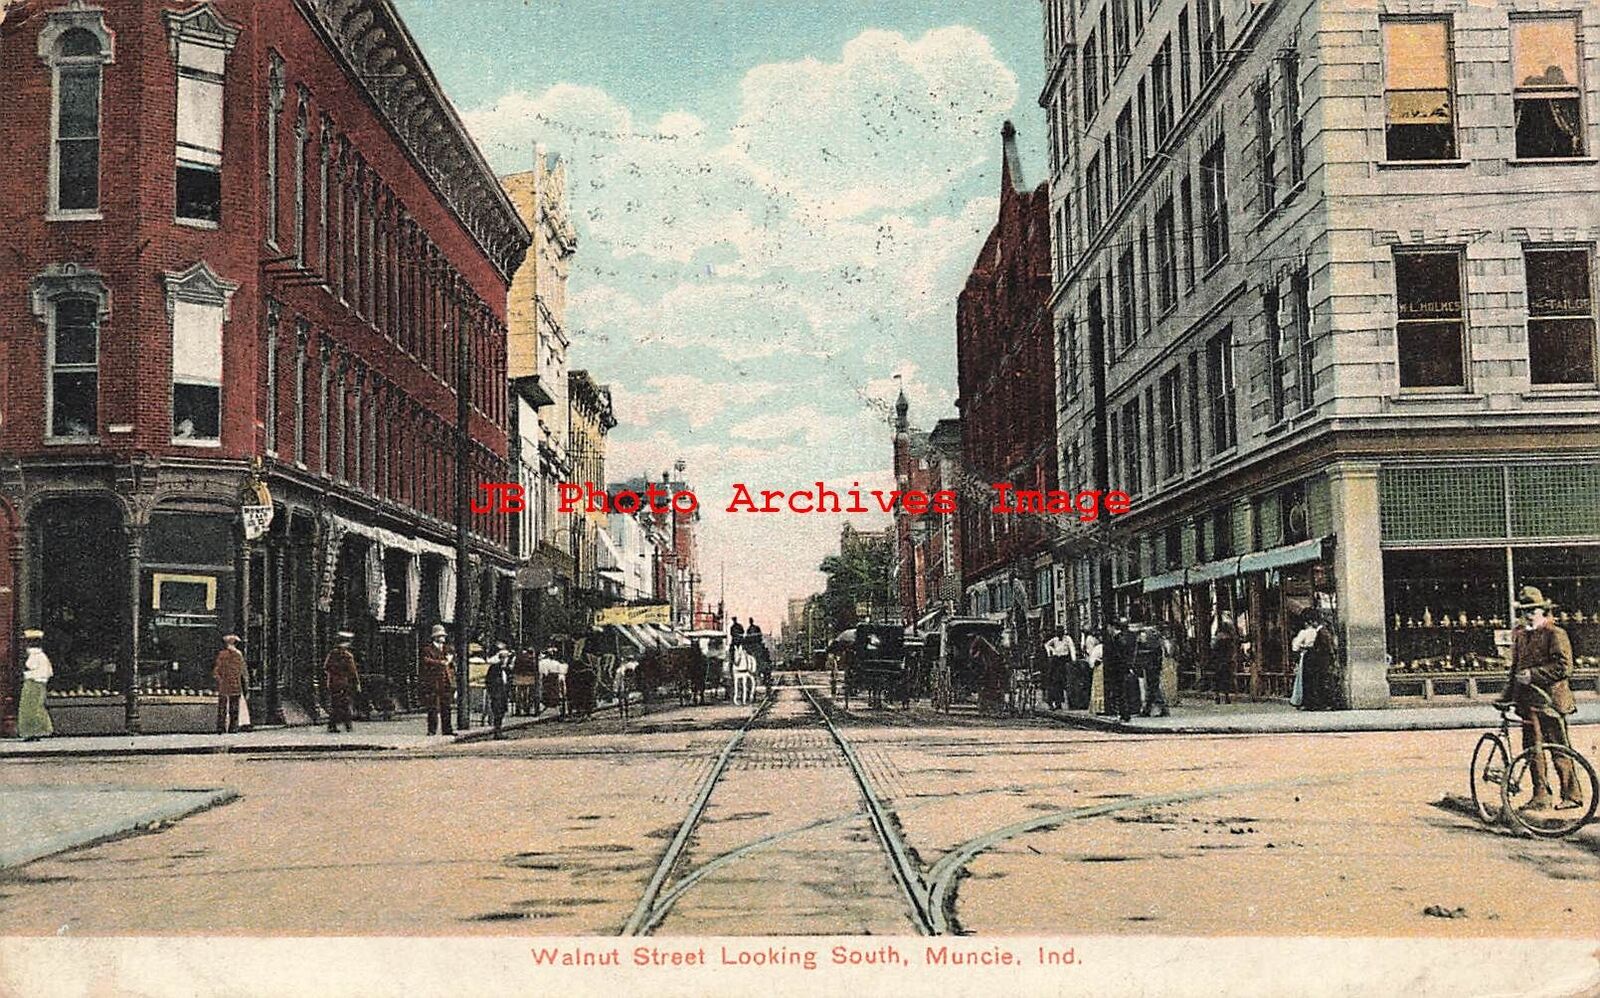 IN, Muncie, Indiana, Walnut Street, Looking South, 1909 PM, Indiana News Pub